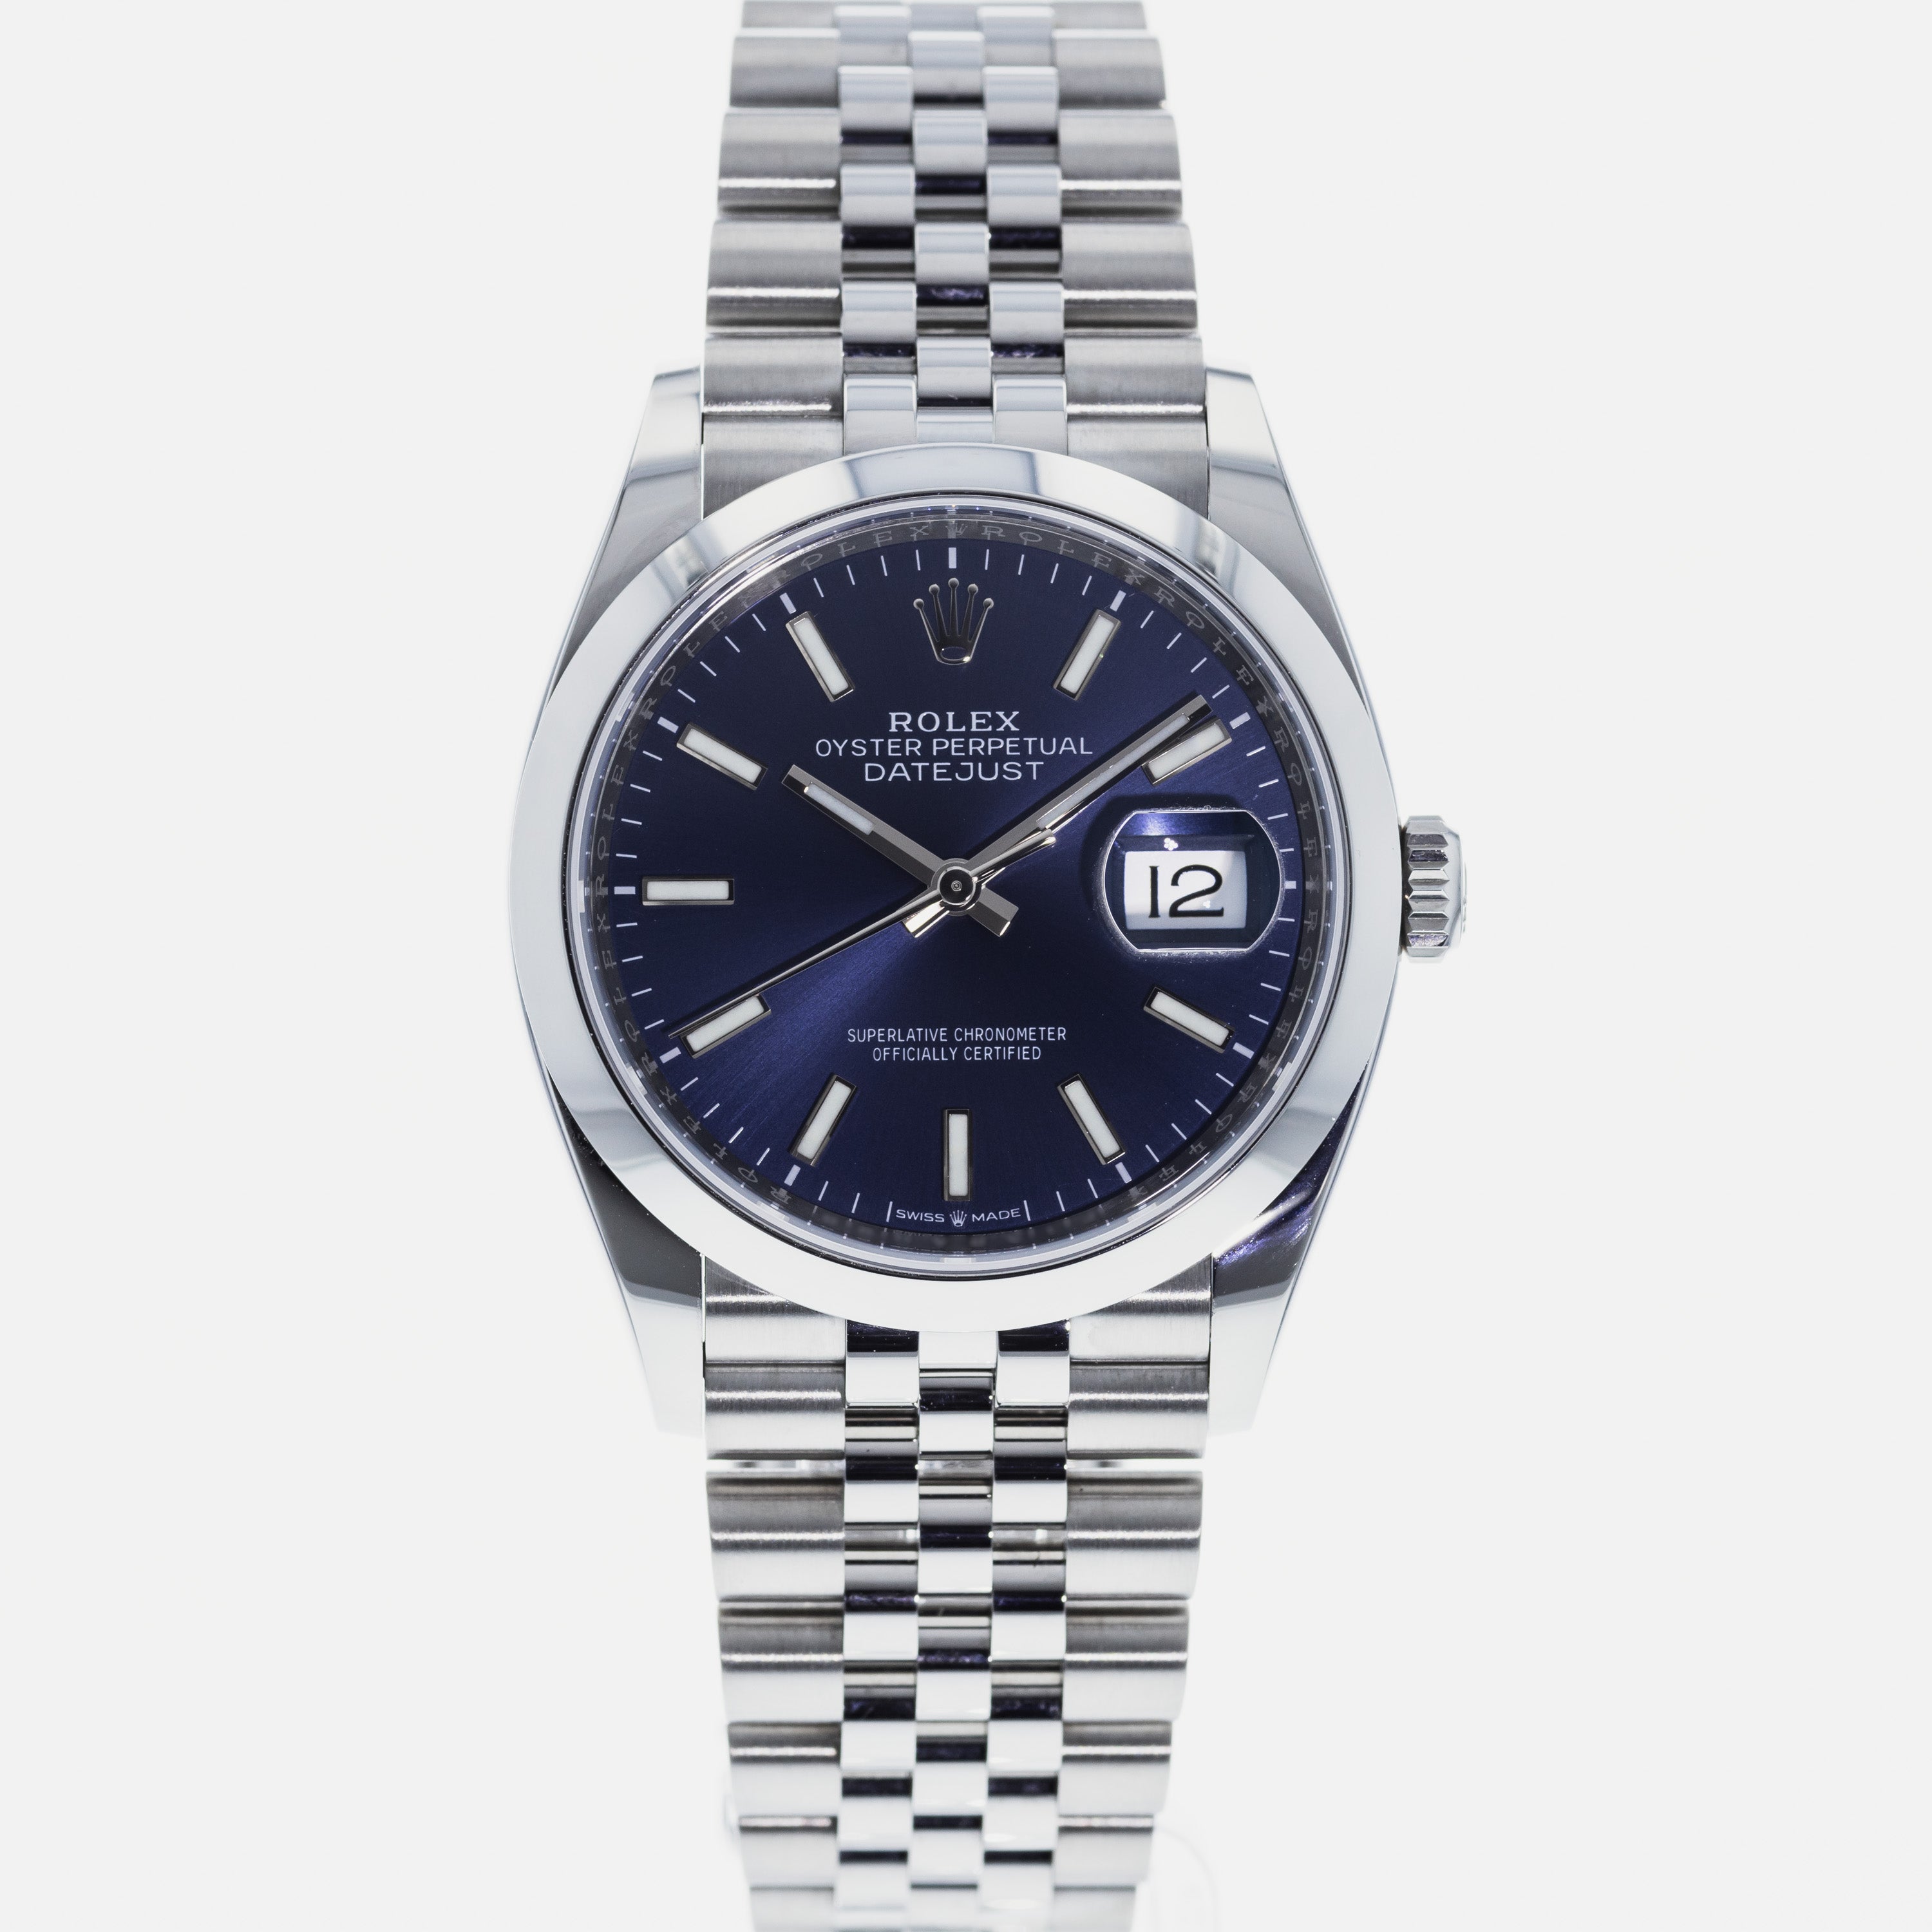 Lamme Hubert Hudson Slægtsforskning Authentic Used Rolex Datejust 36 126200 Watch (10-10-ROL-VD6FLN)